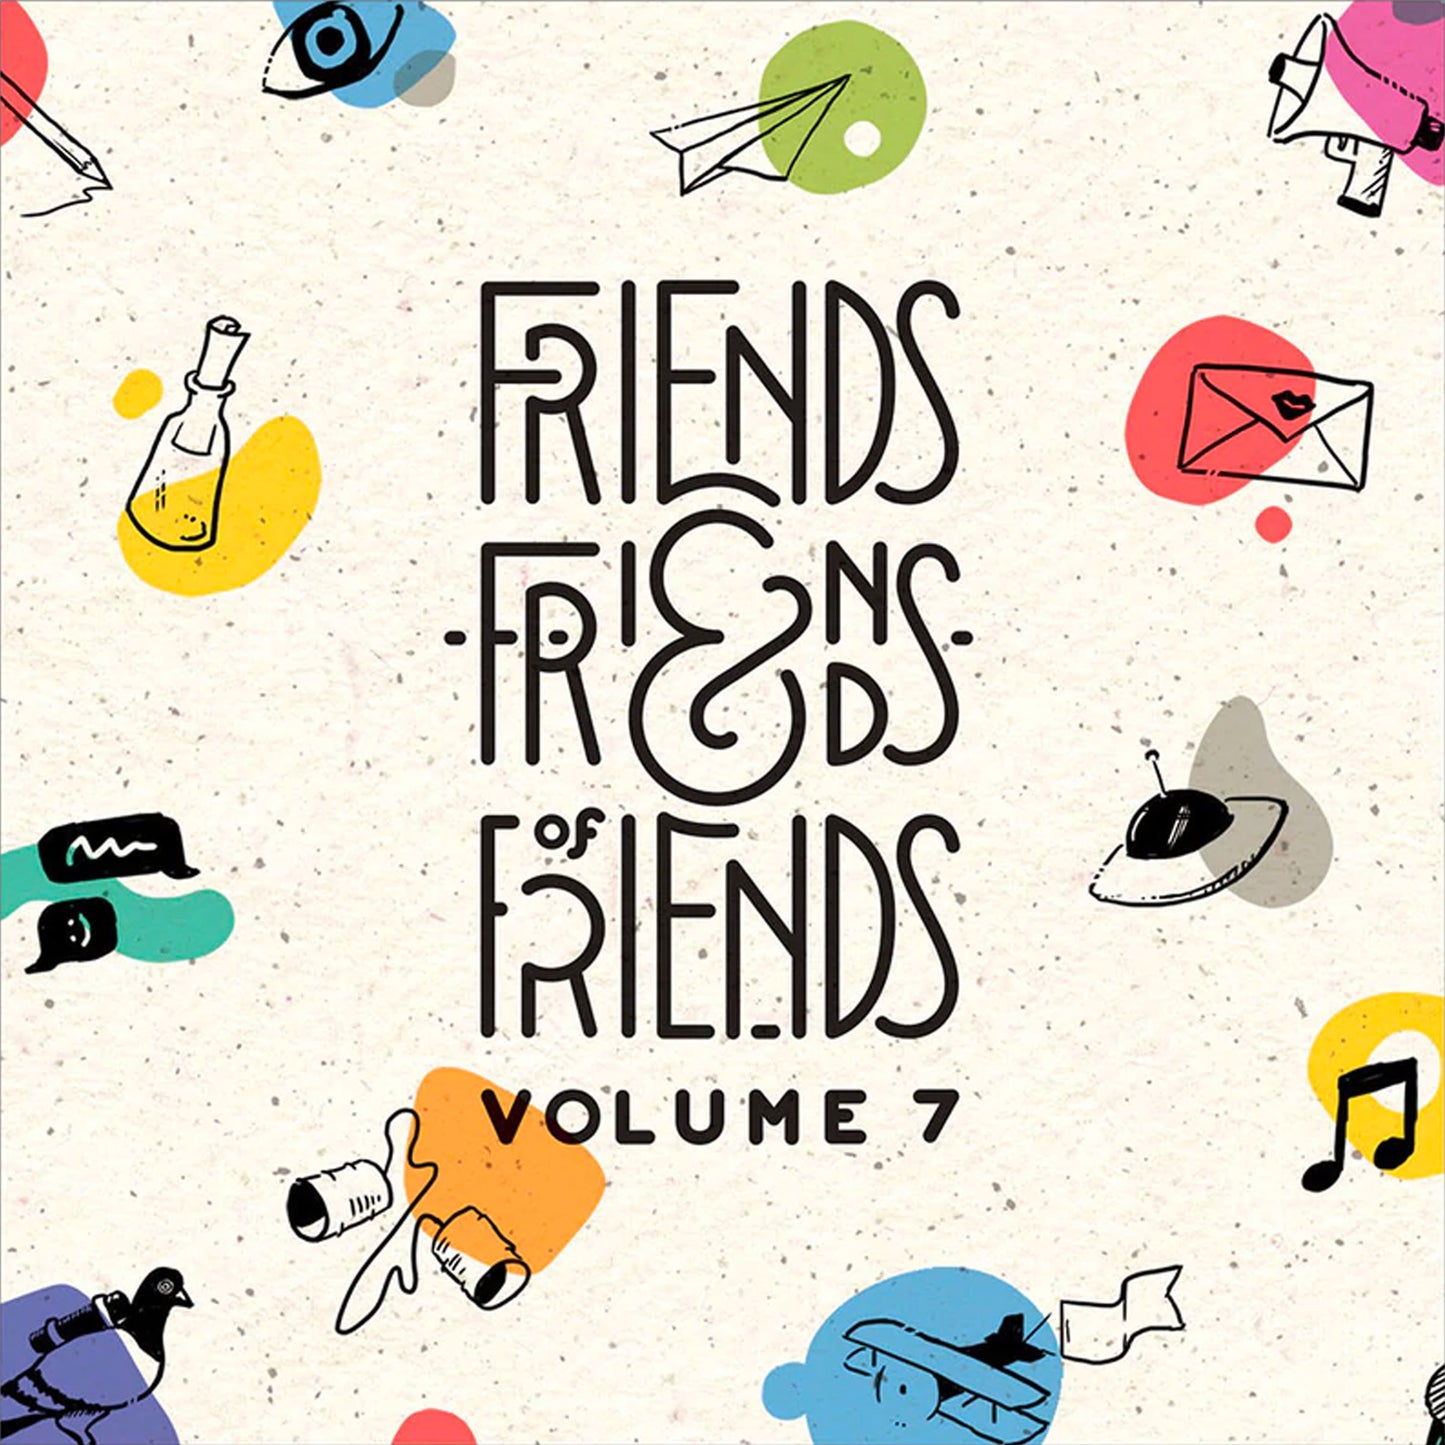 Friends and Friends of Friends Vol. 7